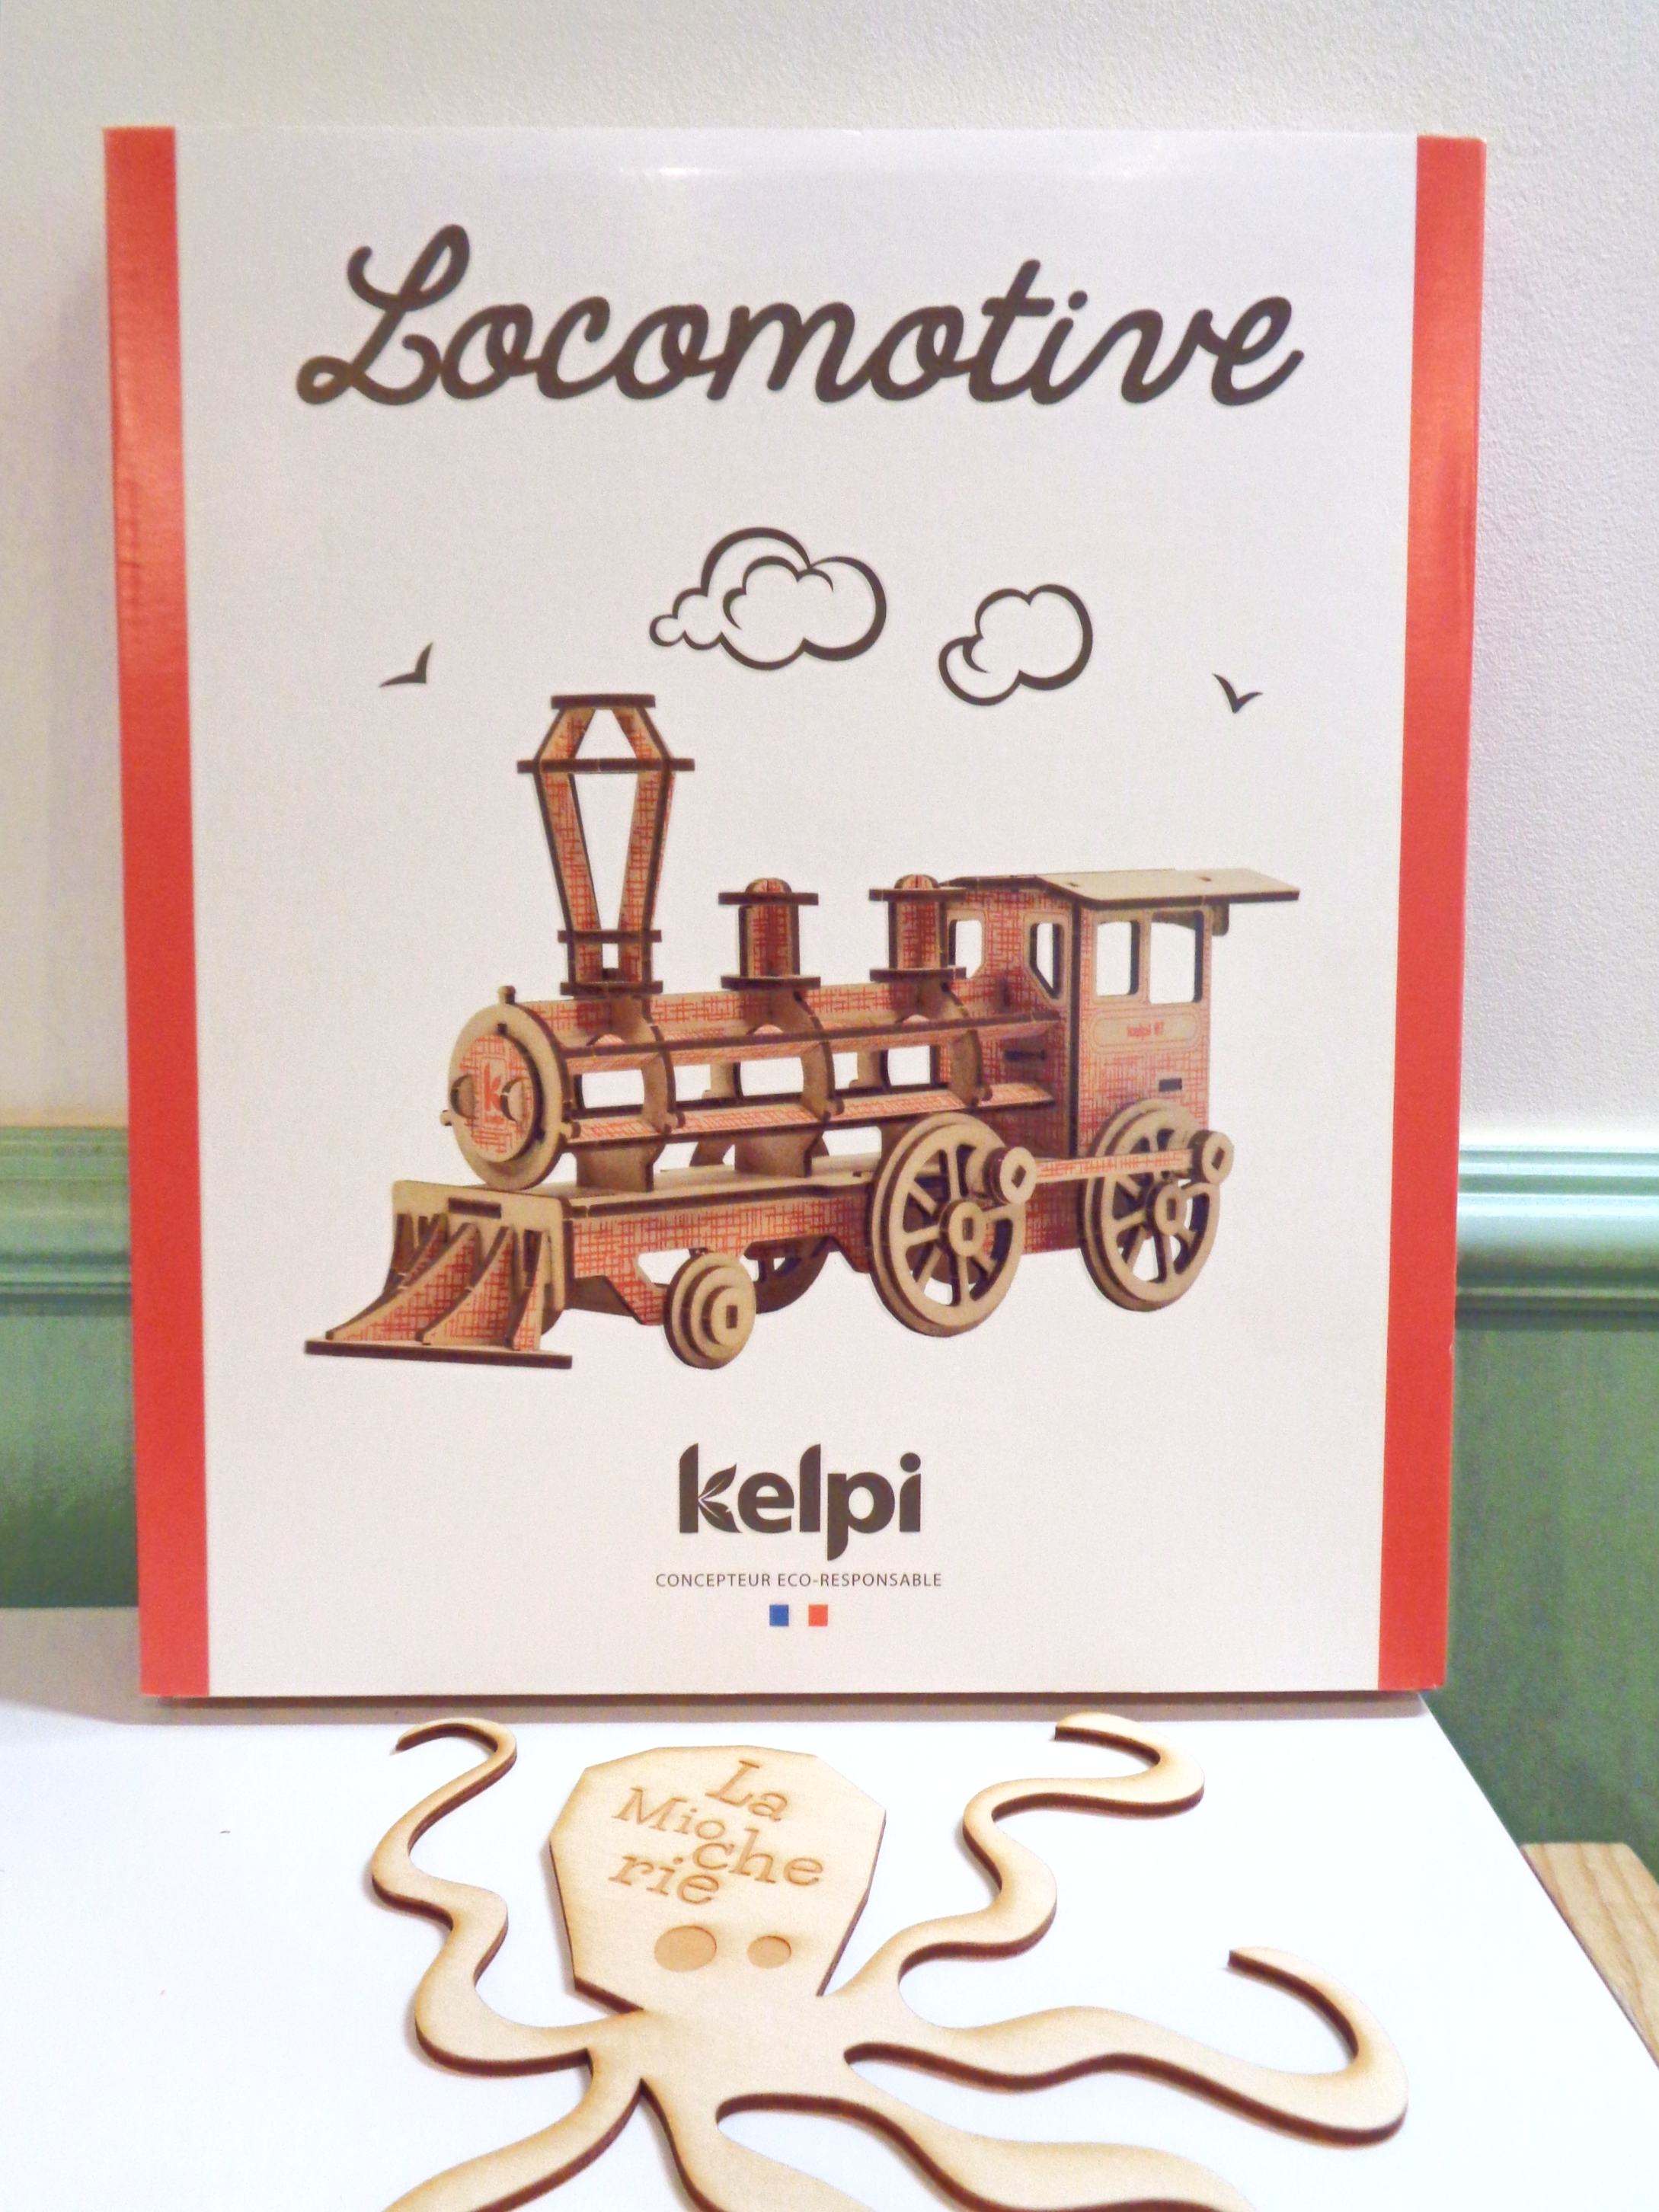 The model locomotive - Kelpi -